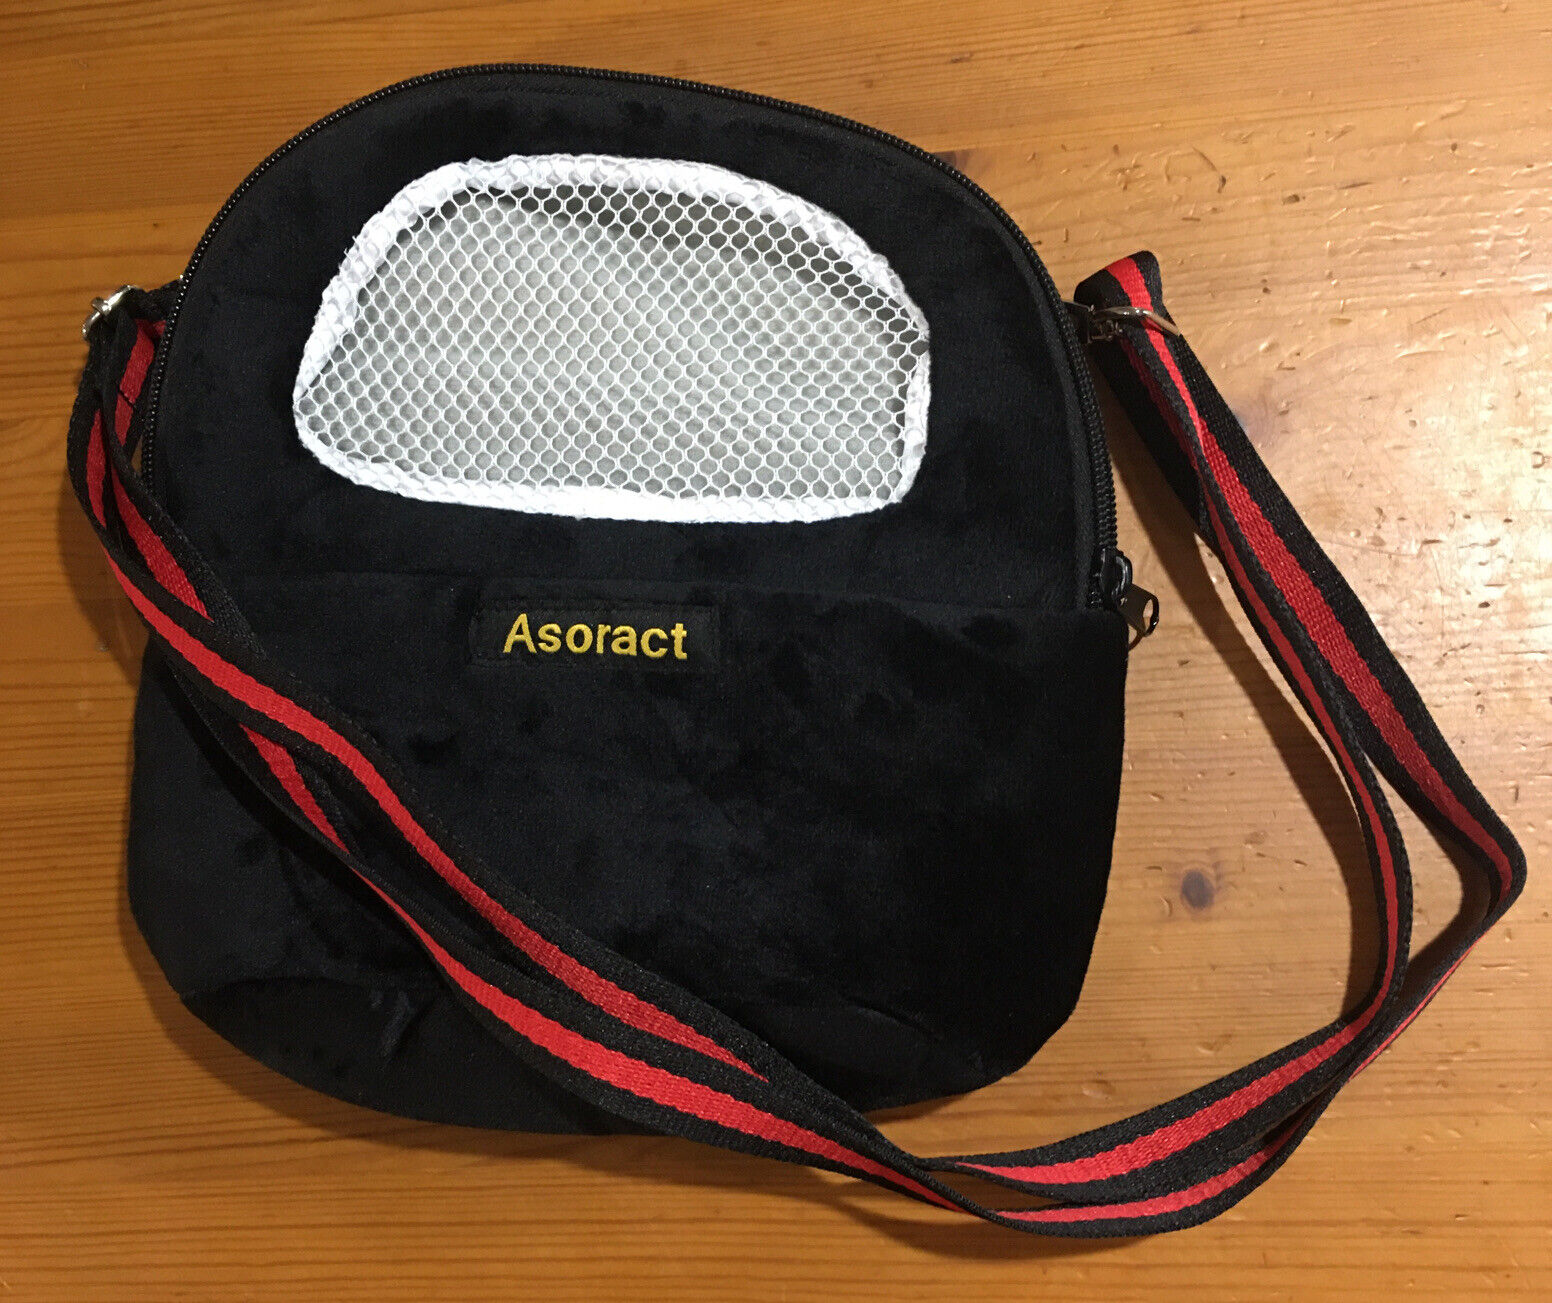 Asoract Small Pet Carrier Bag, Black (OPEN)